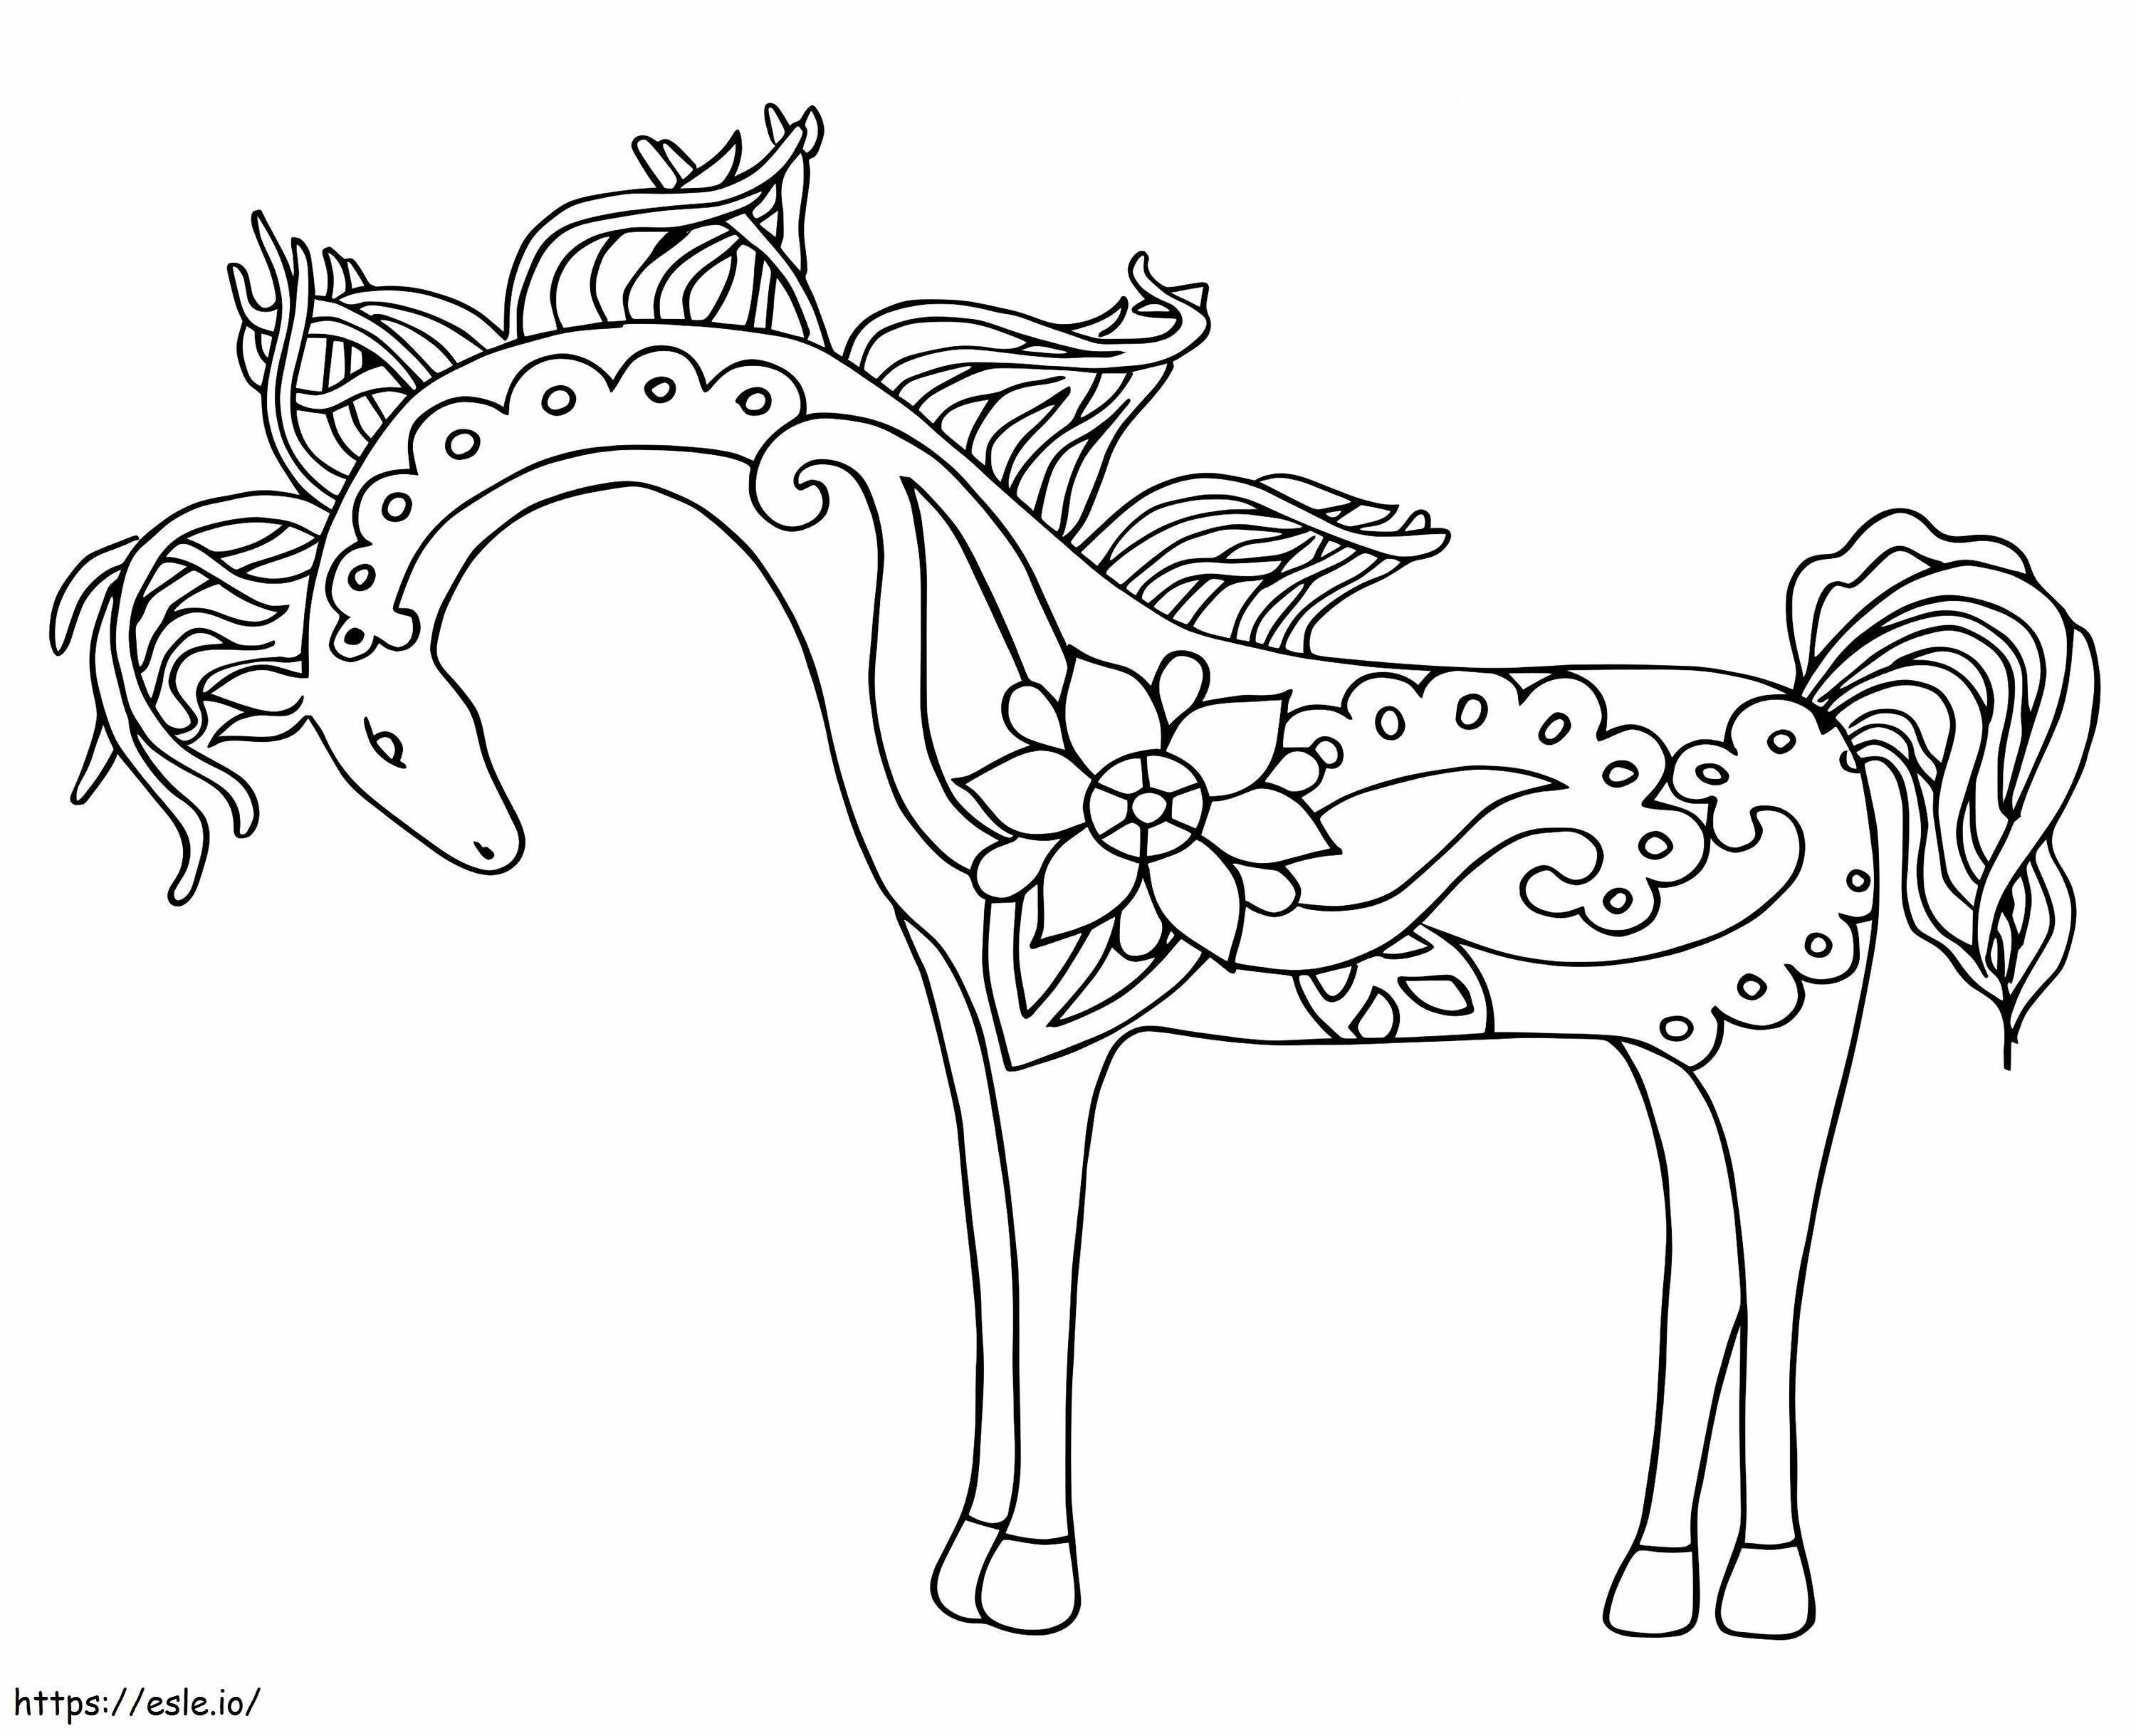 Fantastic Horse Alebrijes coloring page